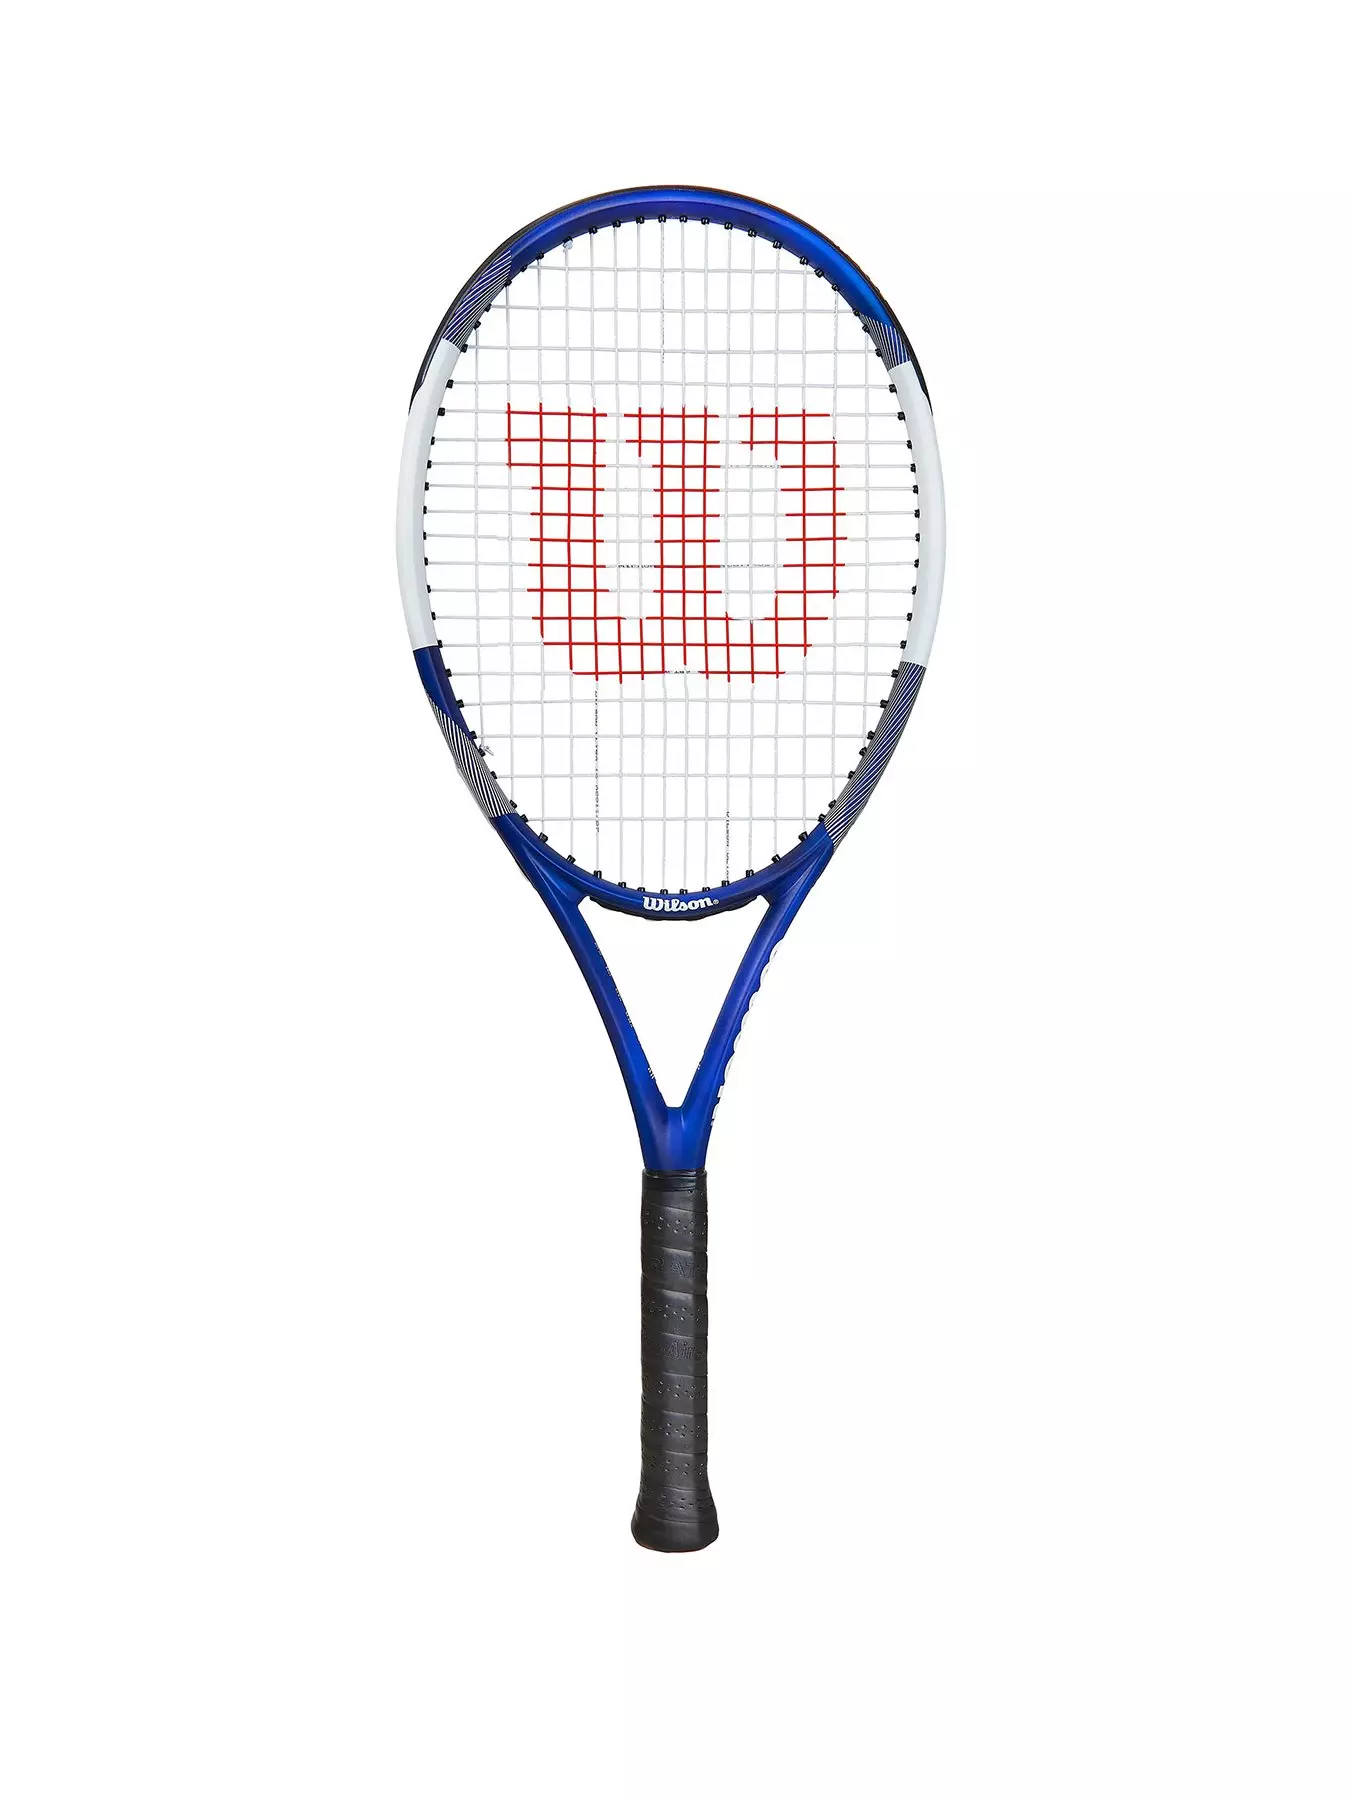 Tennis raquets, Tennis equipment, Sports & leisure